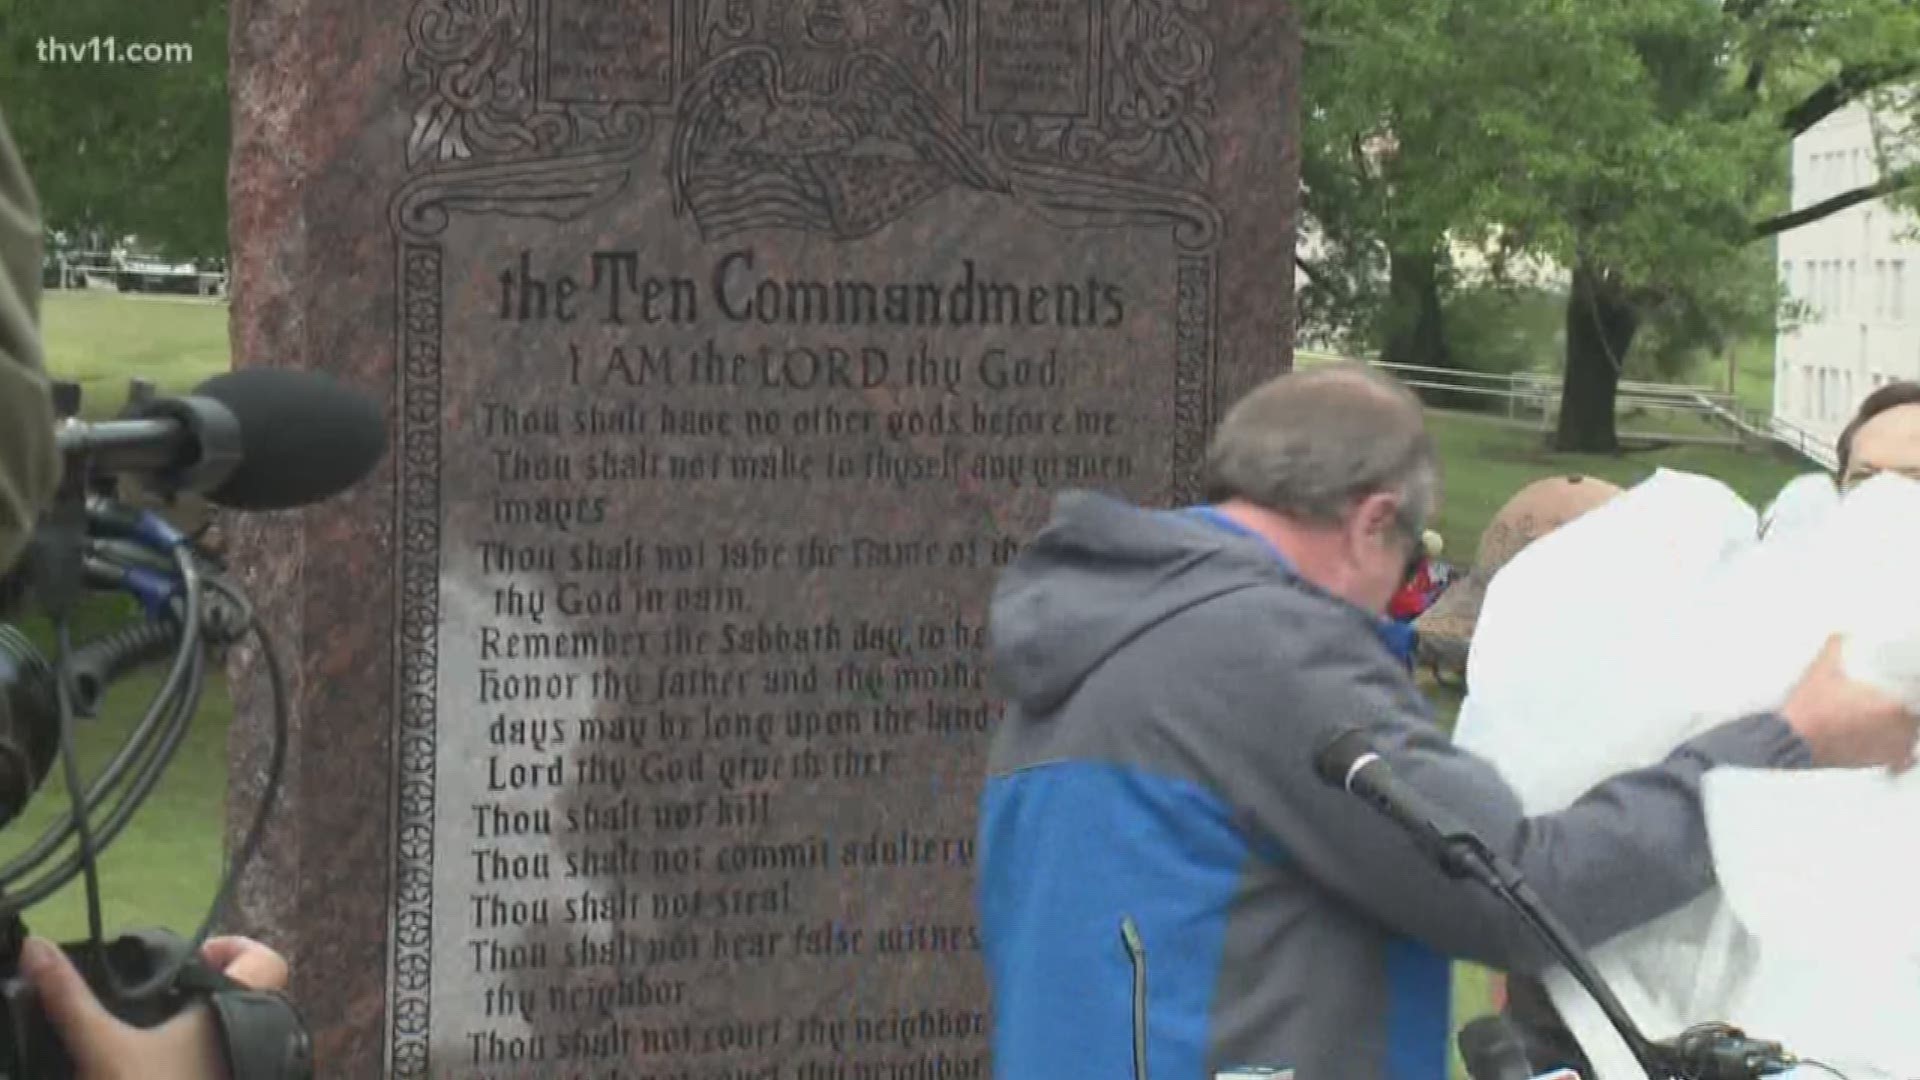 Lawsuits seek to remove Ten Commandments monument